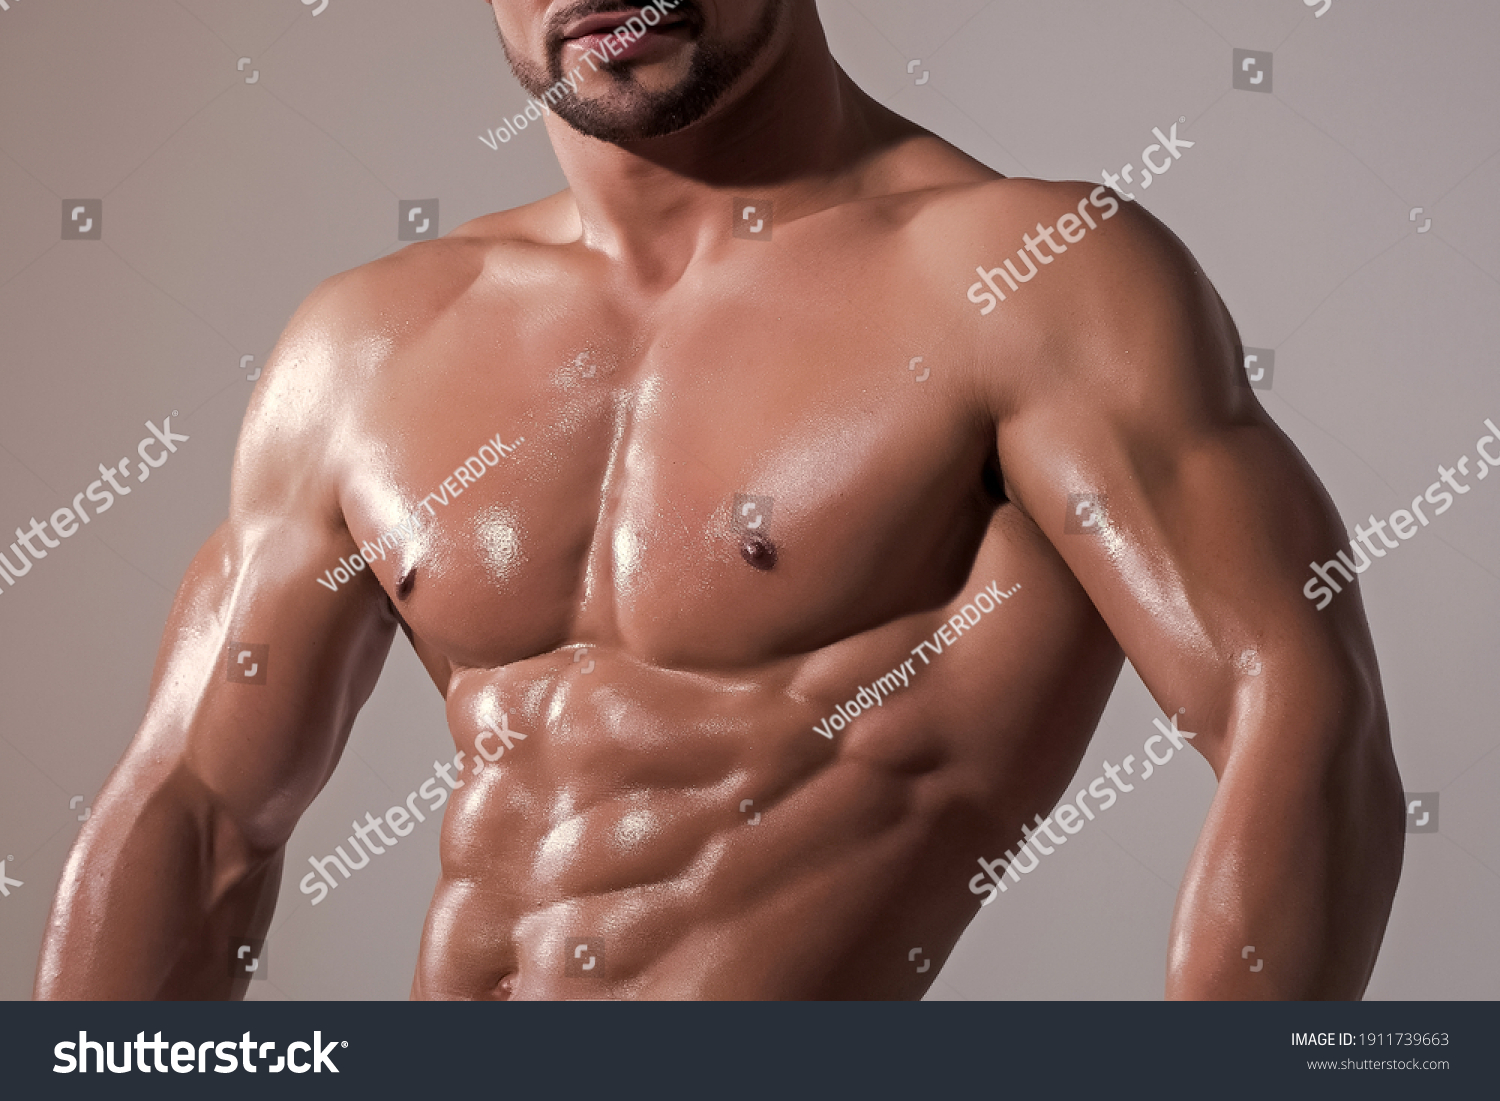 bethany minor add photo hot sexy muscle men